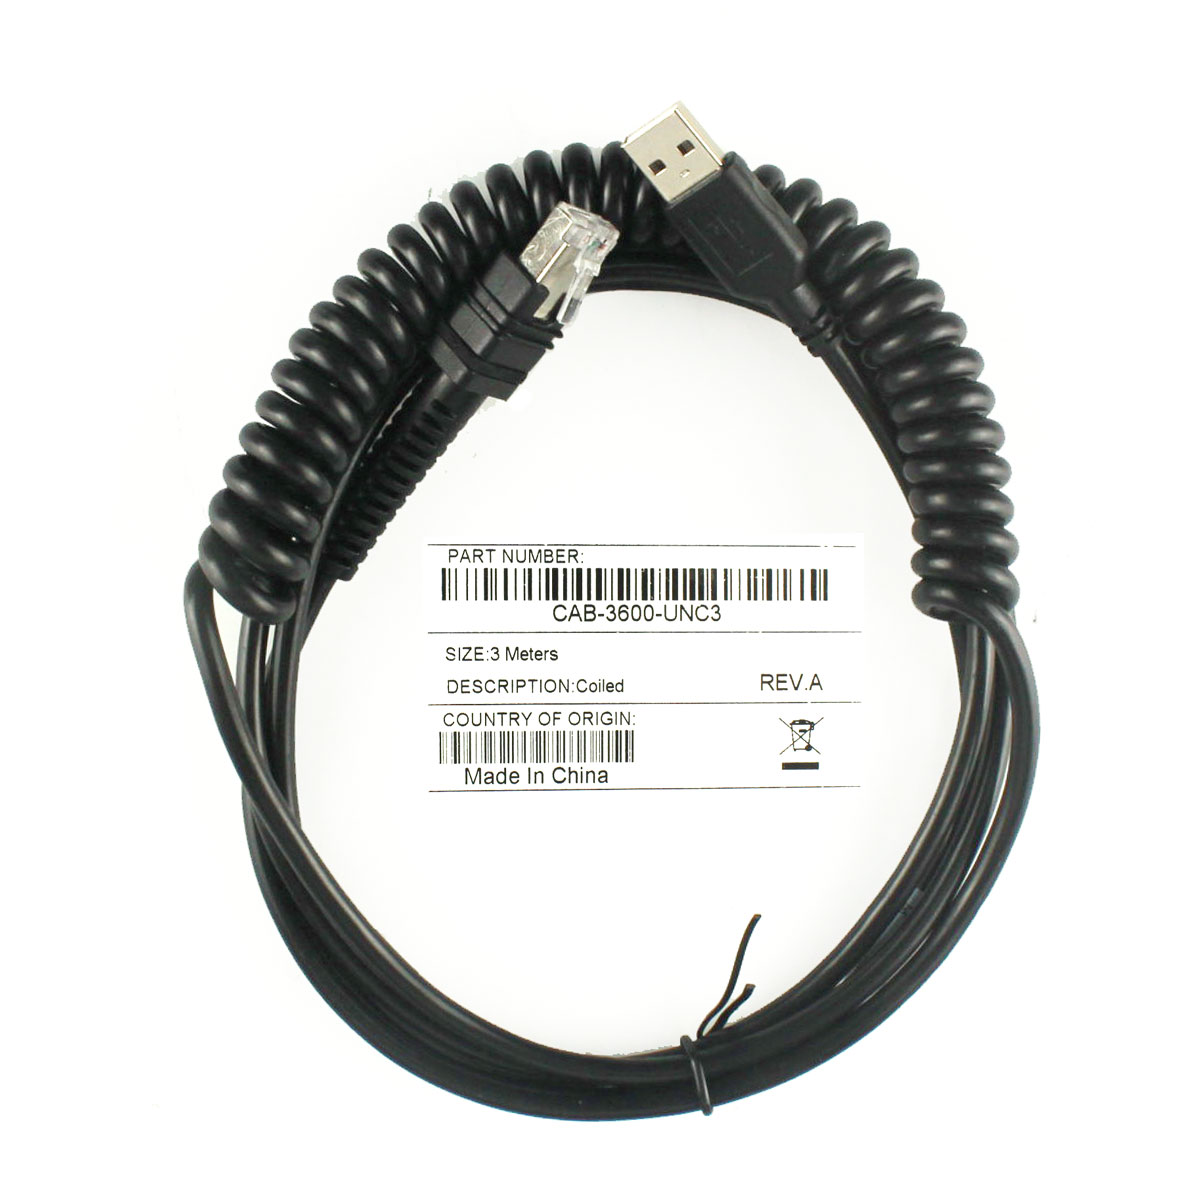 New compatible USB 3 meter Spring cable for Zebra LI3608 LI3678